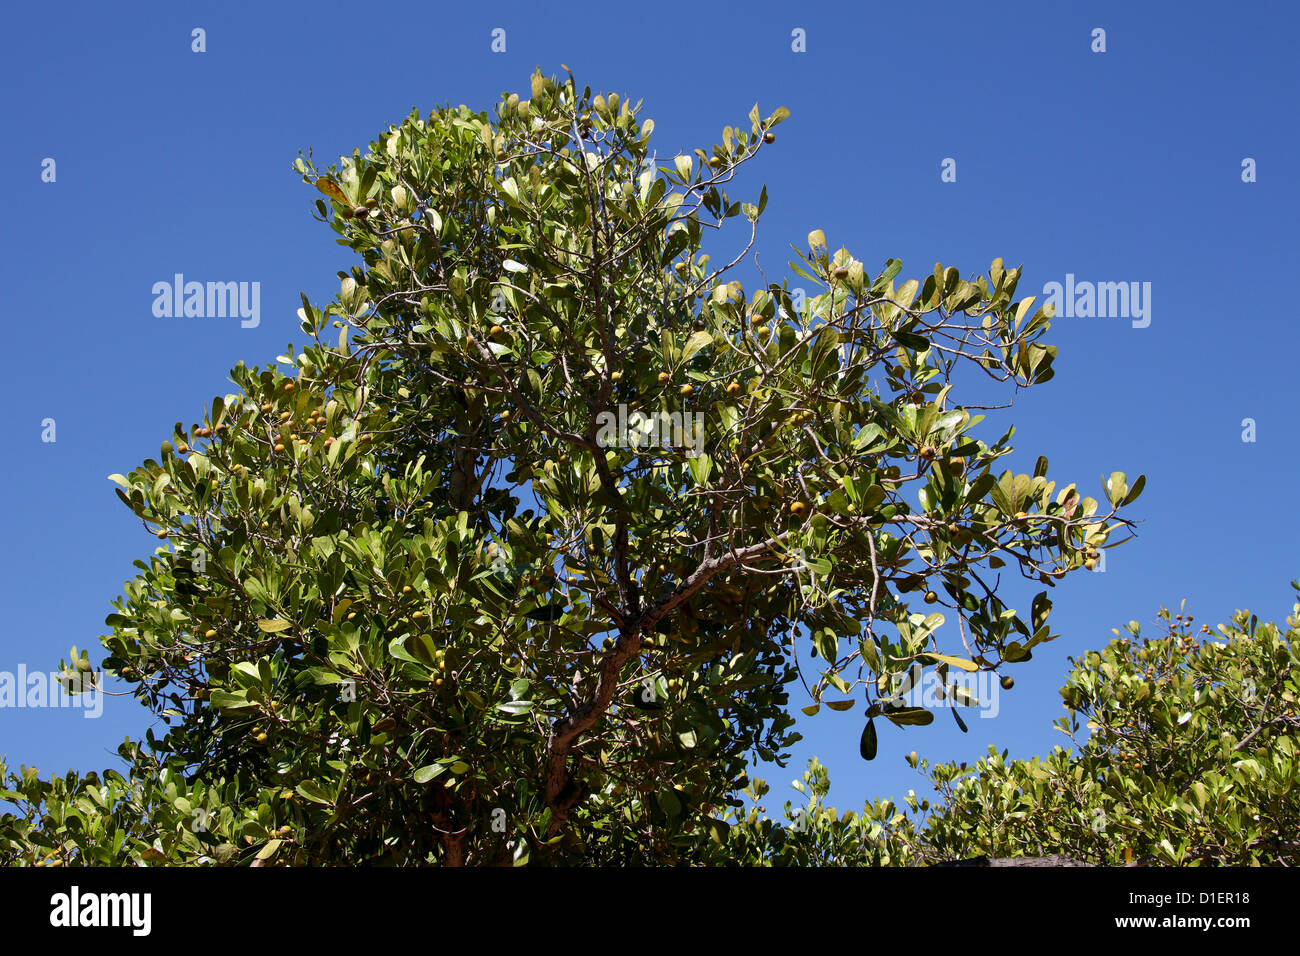 Tapia, Uapaca bojeri, Phyllanthaceae (Euphorbiaceae). Ranohira, Isalo National Park, Madagascar, Africa. Stock Photo